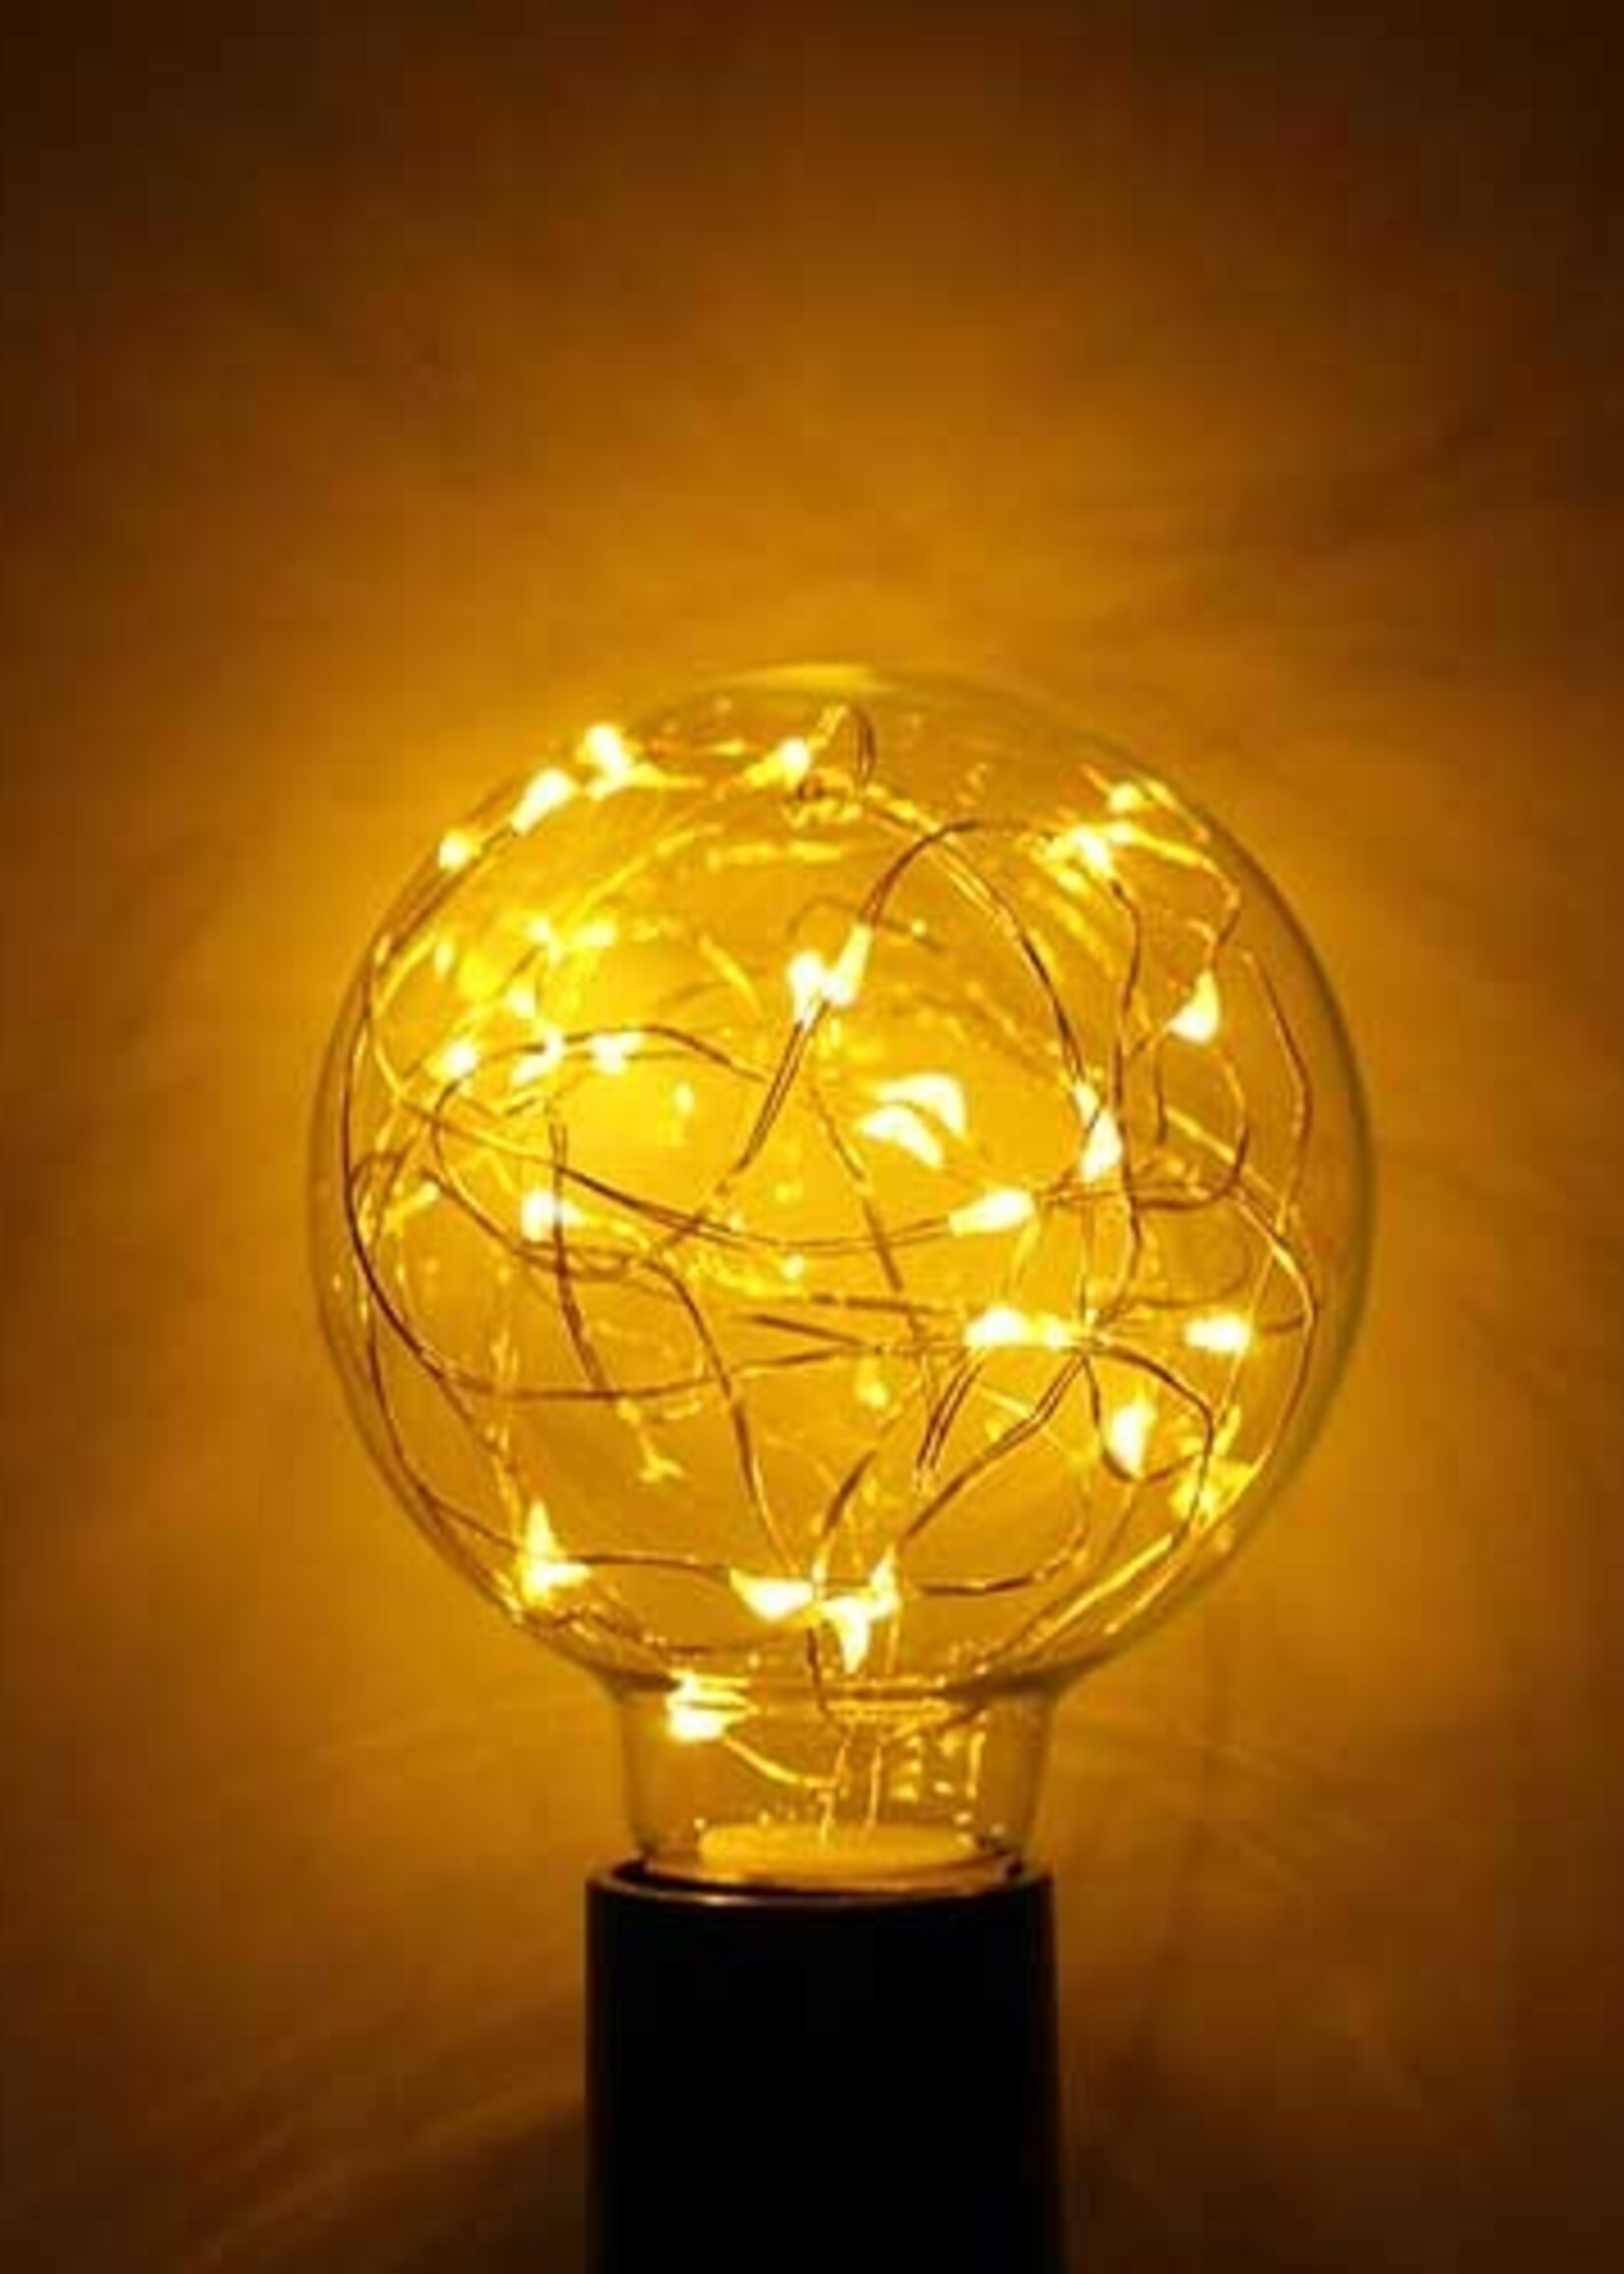 LEDWINKEL-Online E27 LED Lamp filament G95 copper wire 1.5W 2100K amber